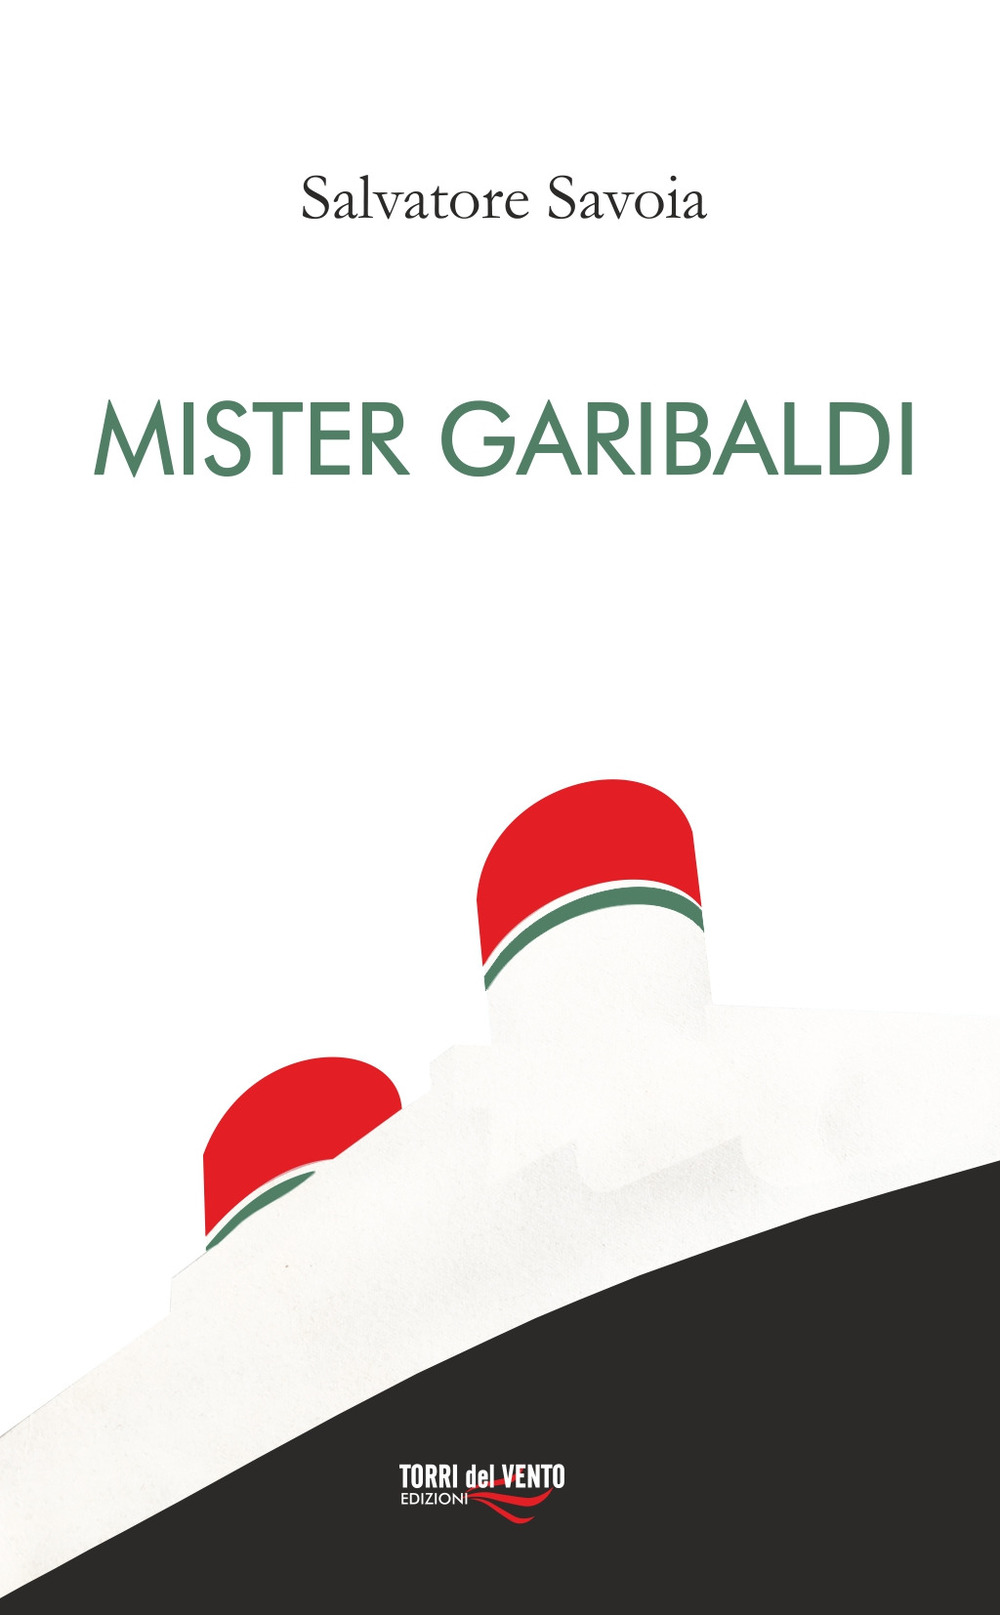 Mister Garibaldi